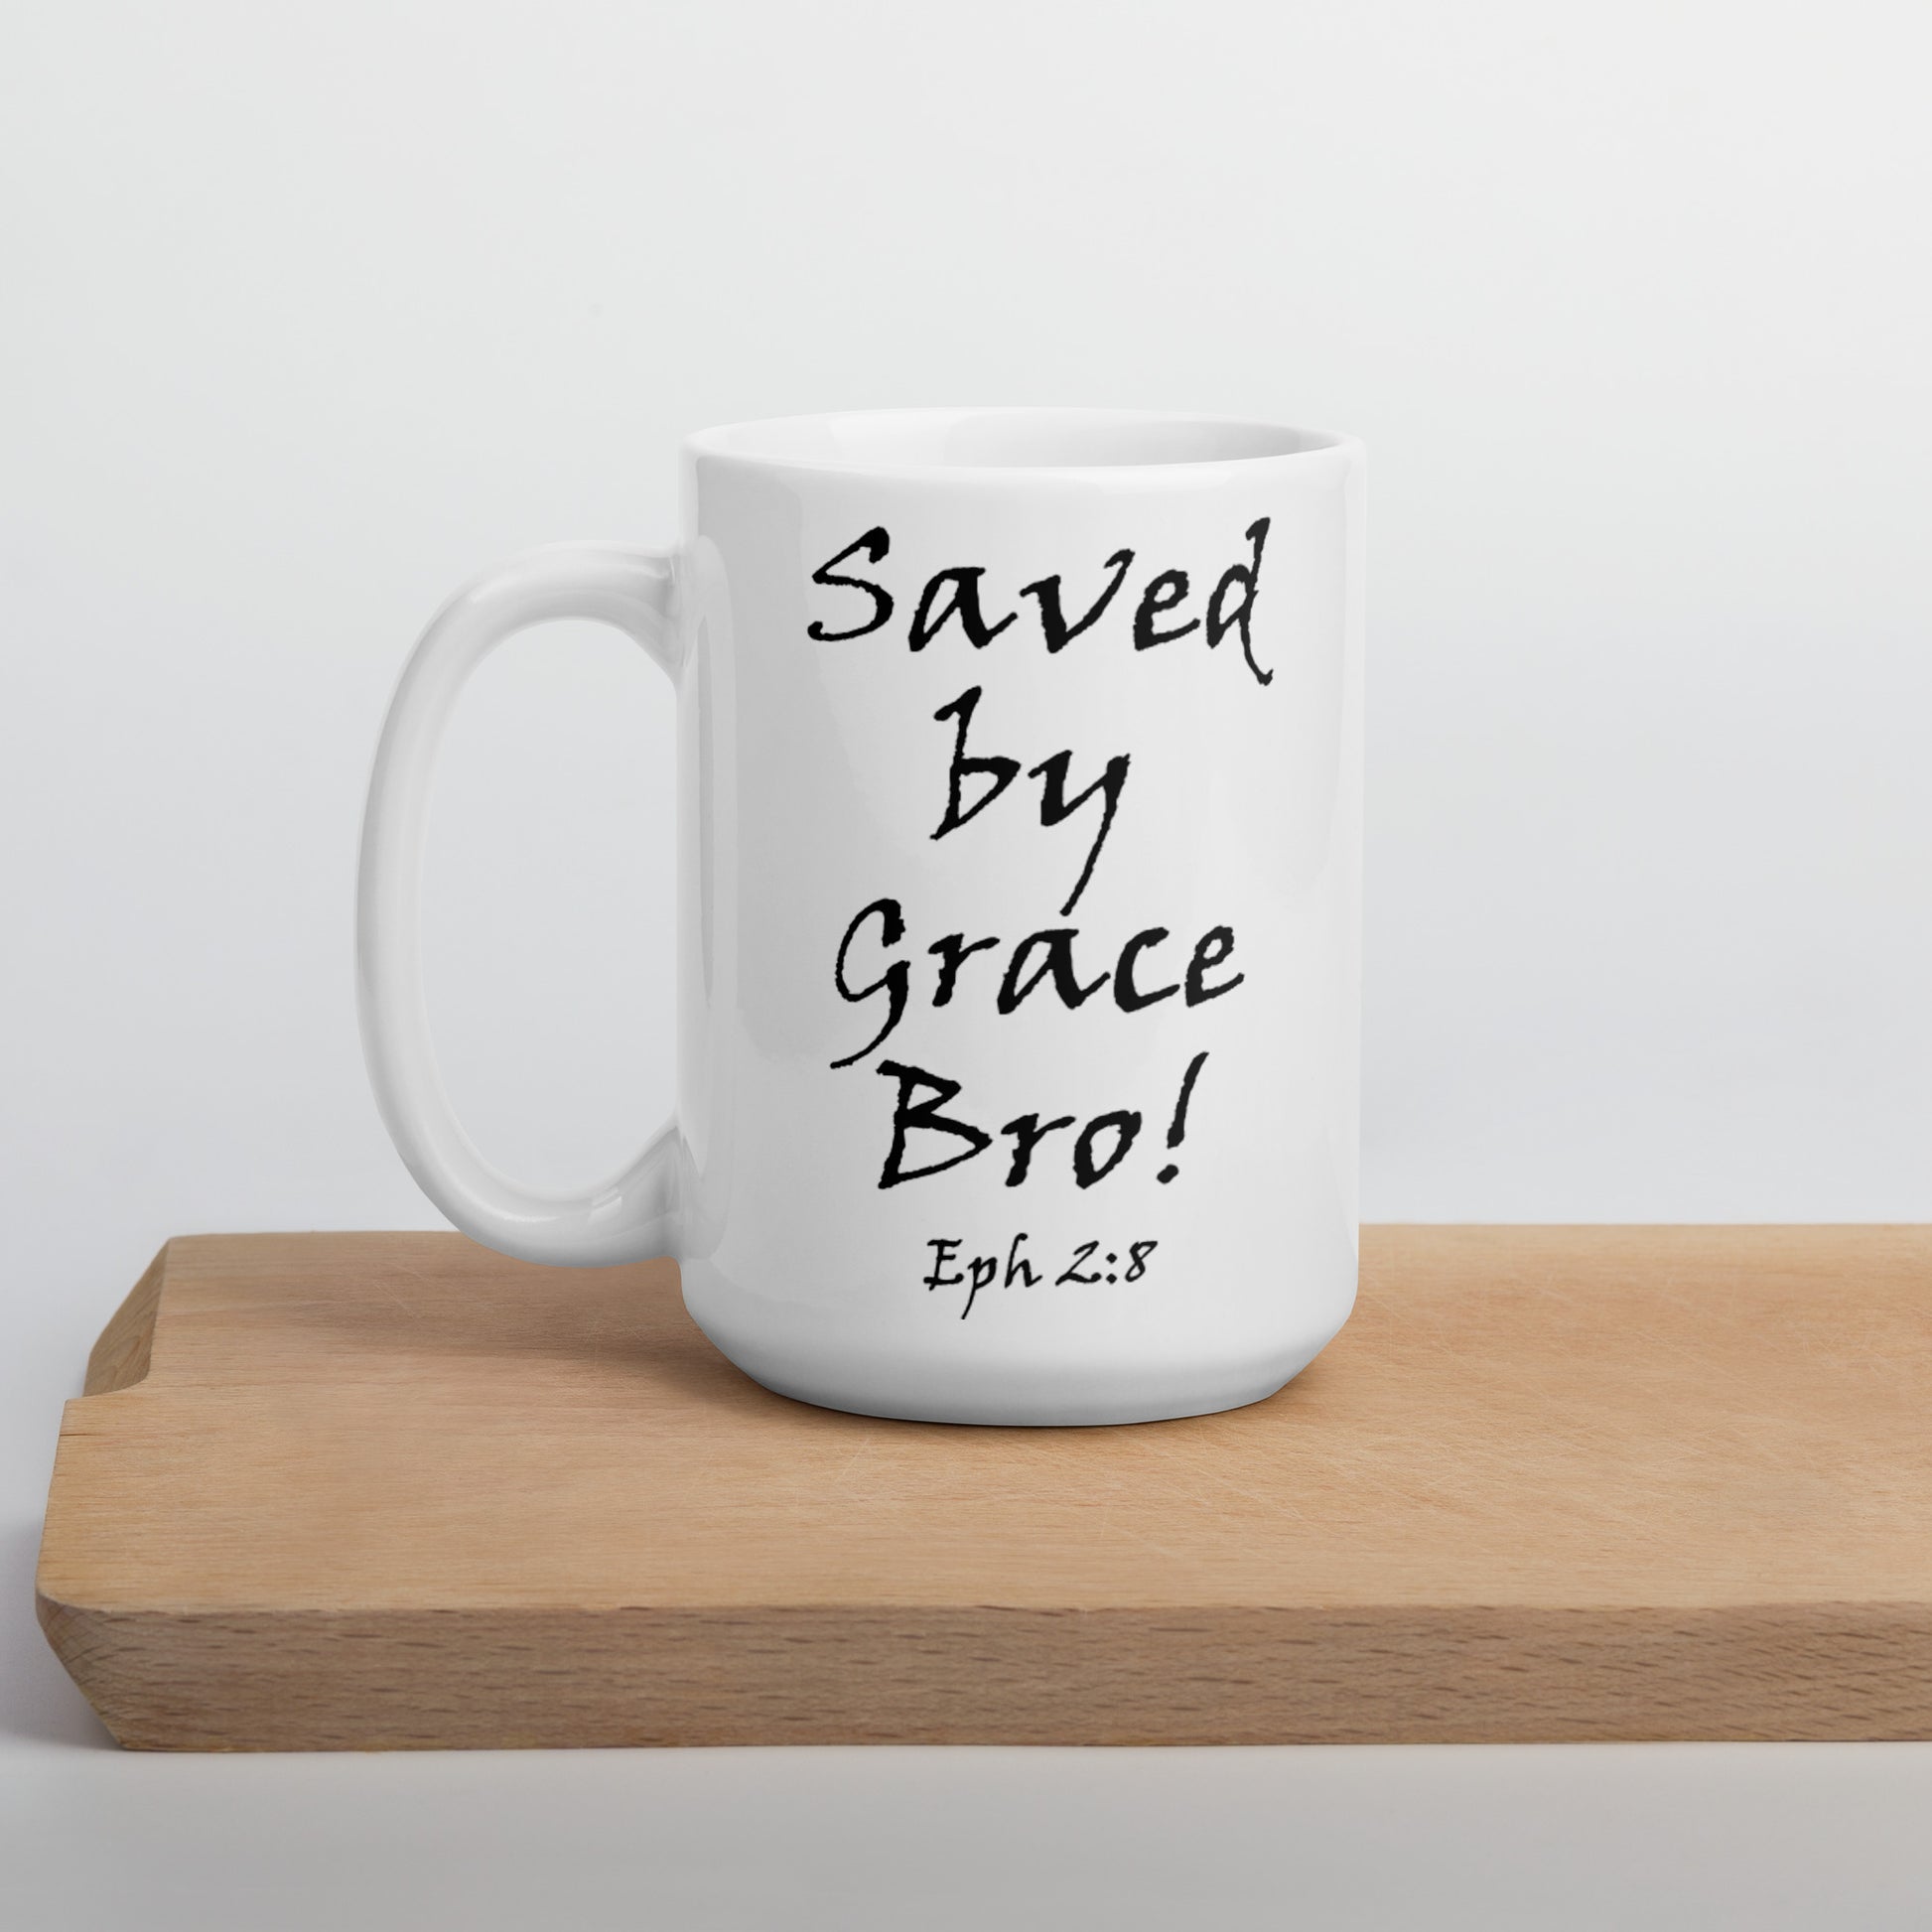 Saved by Grace Bro! White Glossy Ceramic Mug - Solid Rock Designs | Christian Apparel